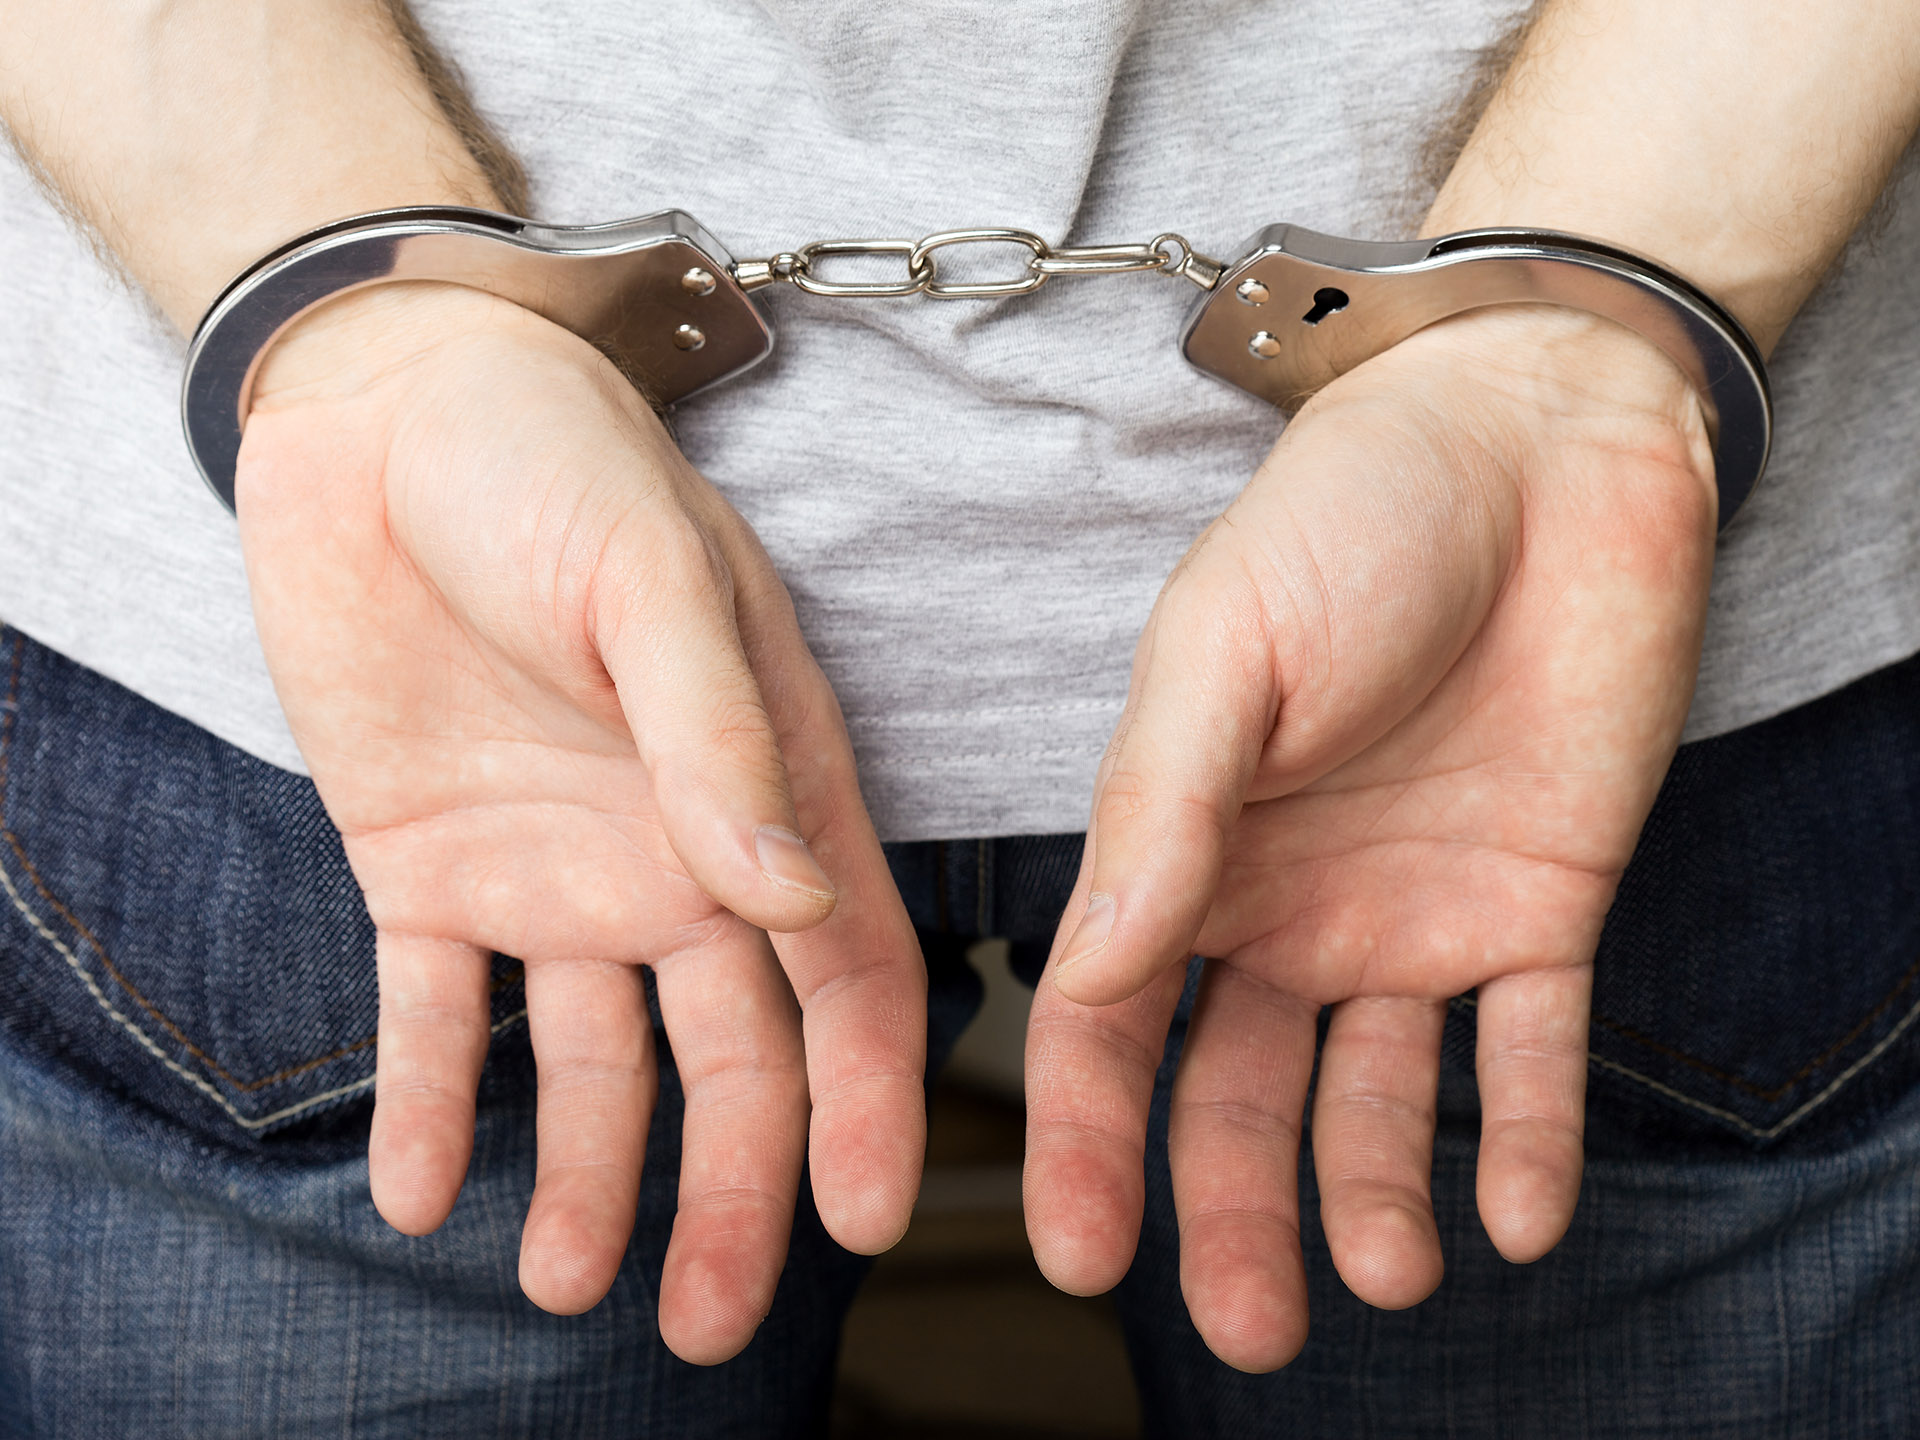 Arrested Man In Handcuffs